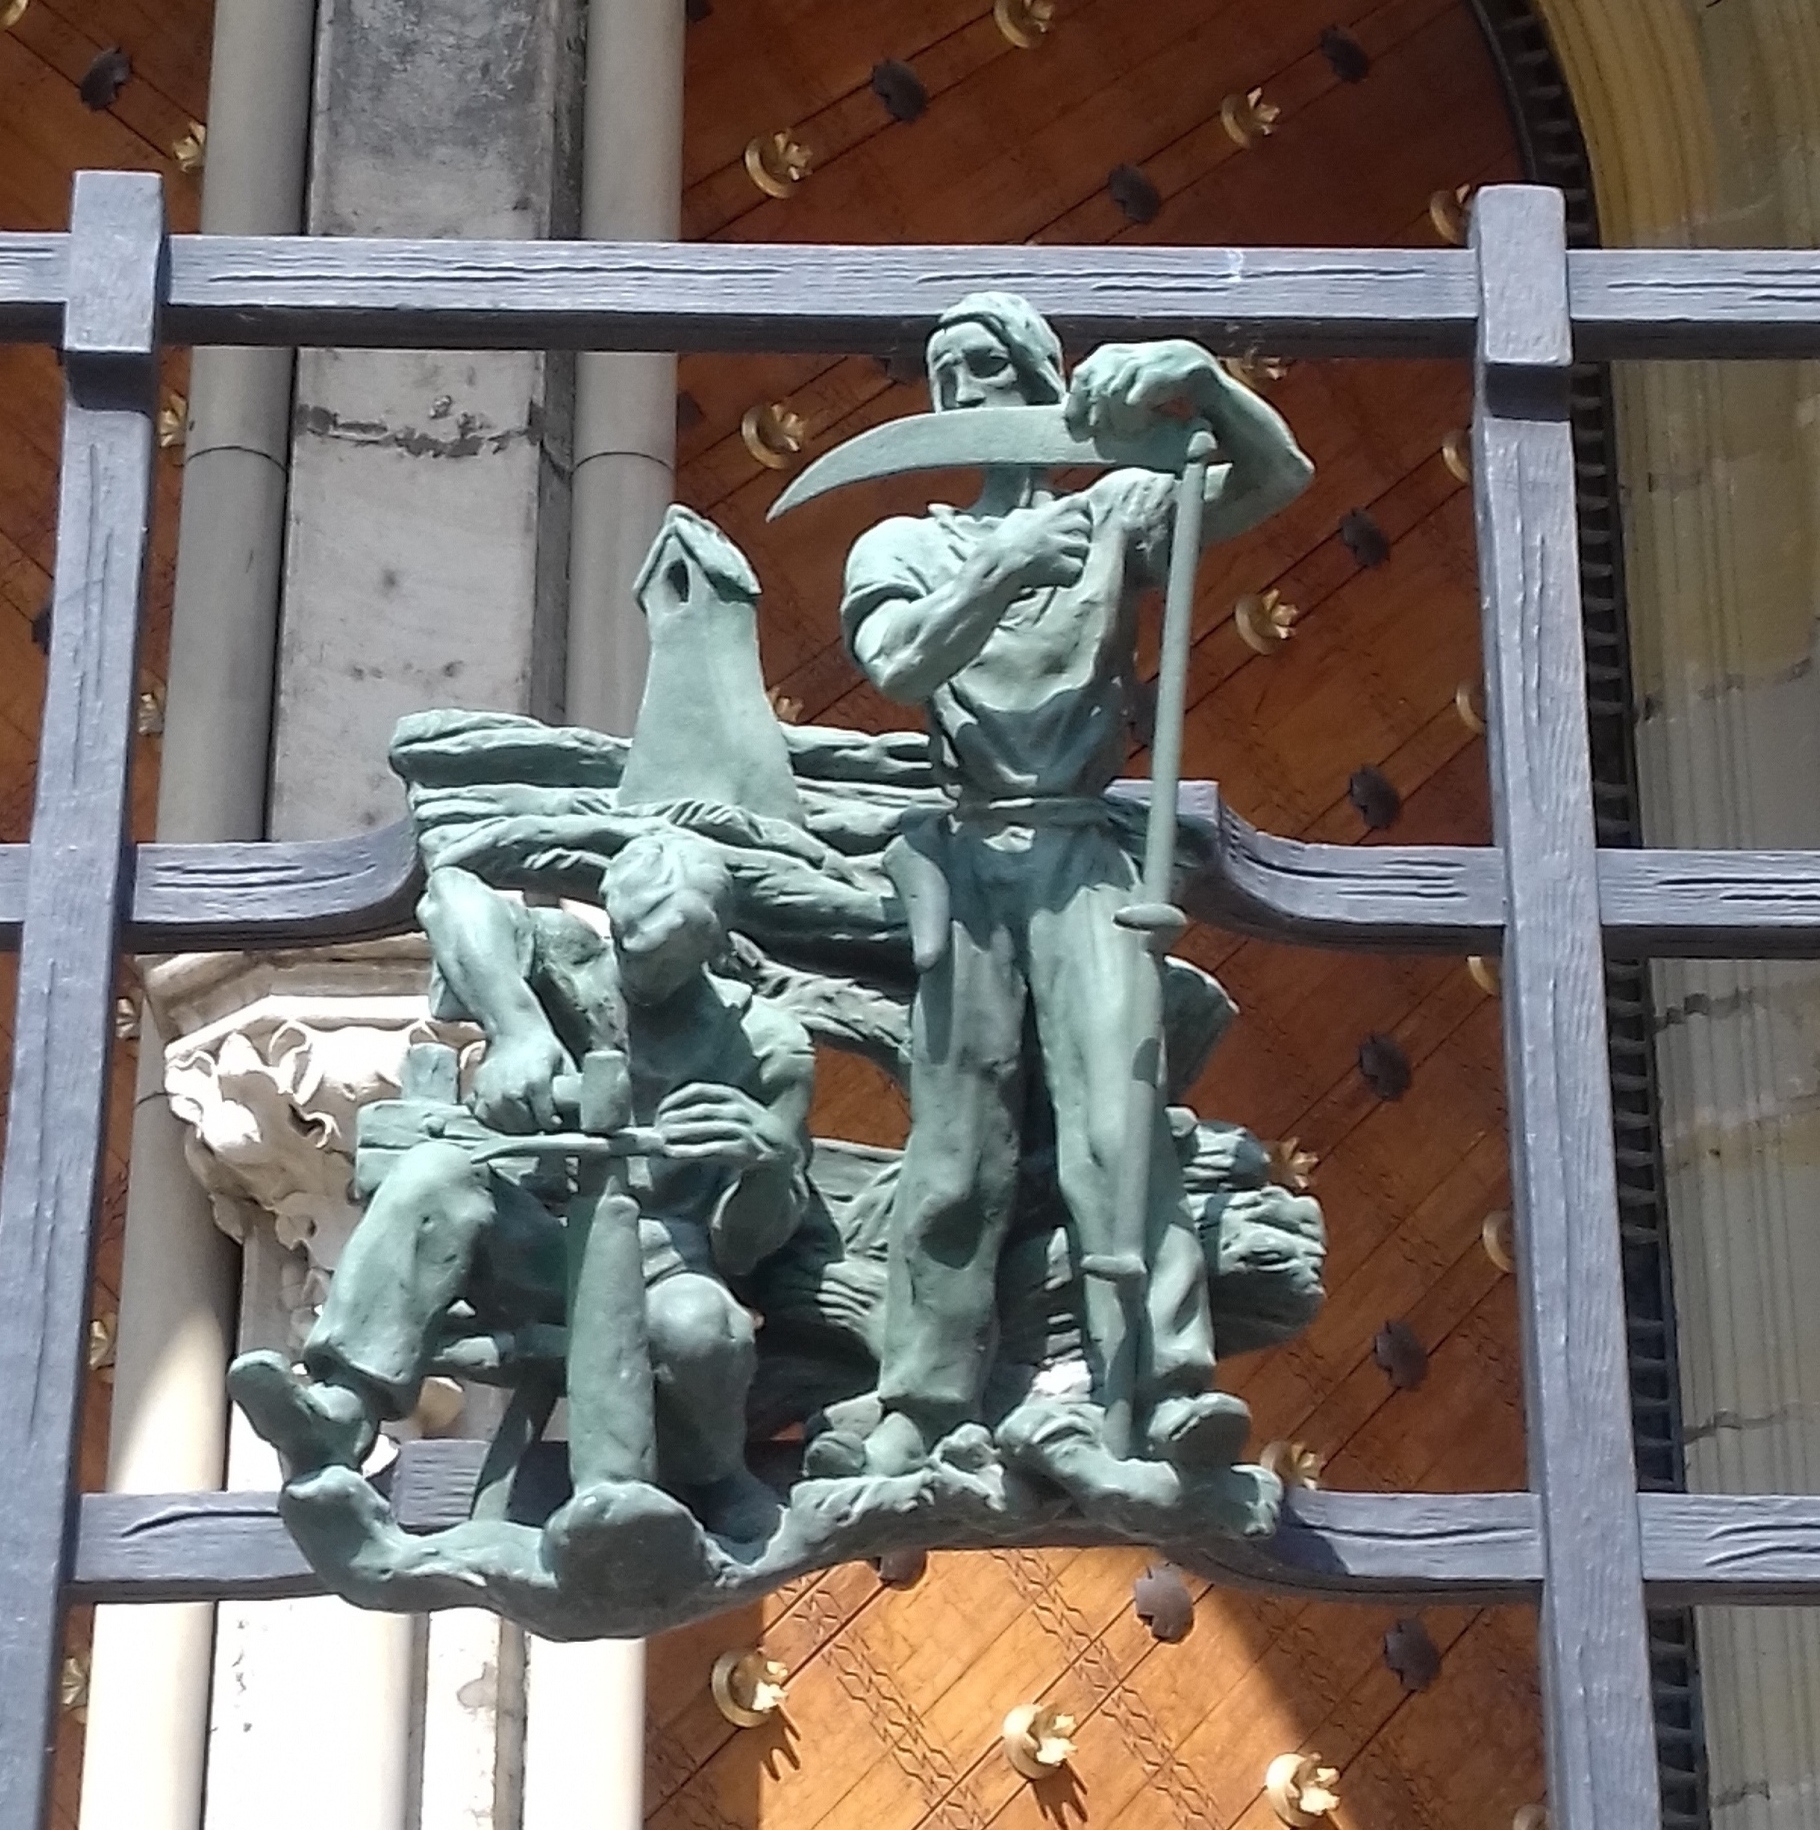 Scythe detail from St Vitus Cathedral, Prague